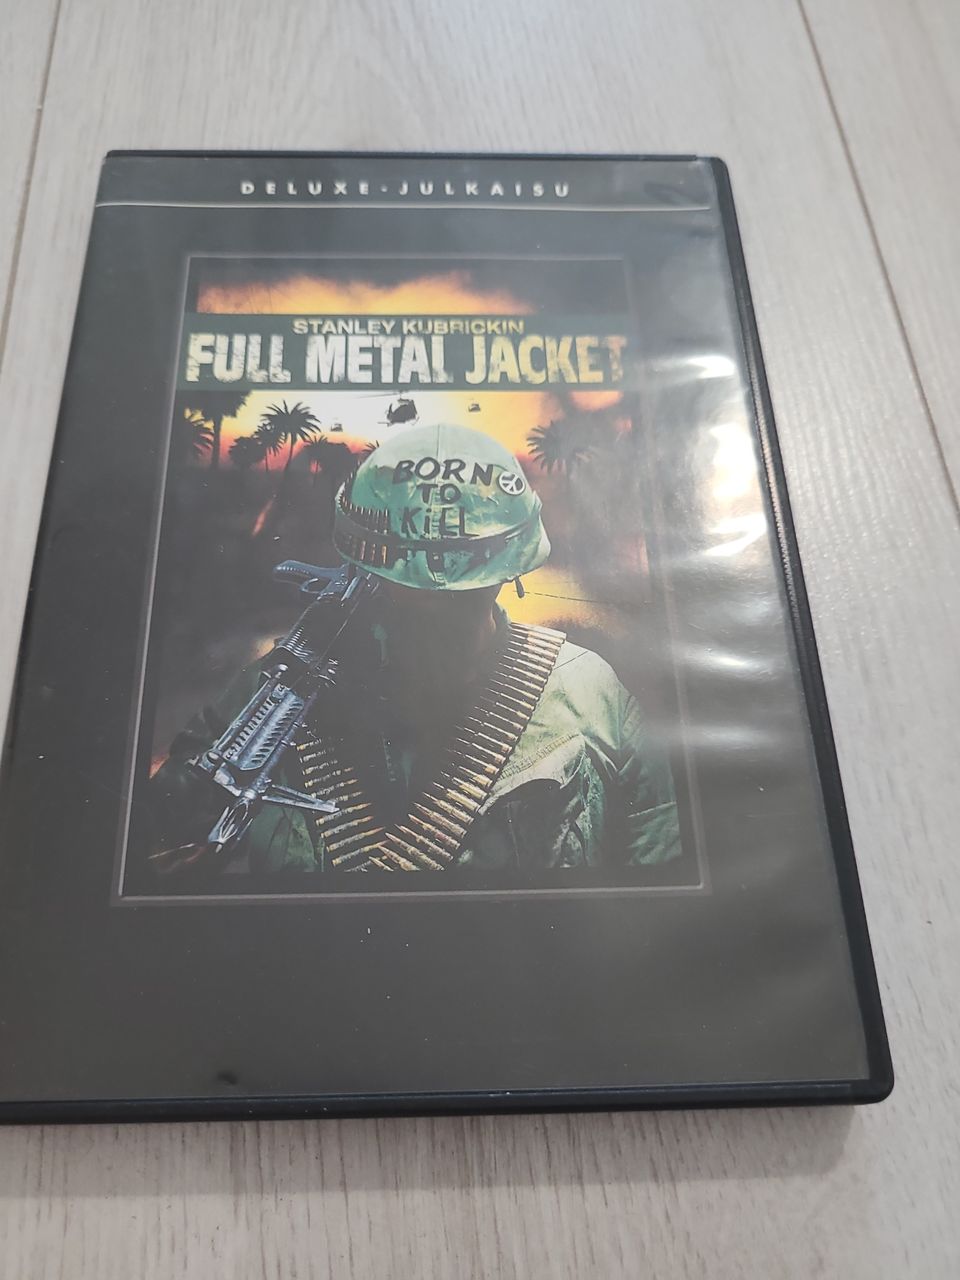 Full Metal Jacket Deluxe-julkaisu DVD